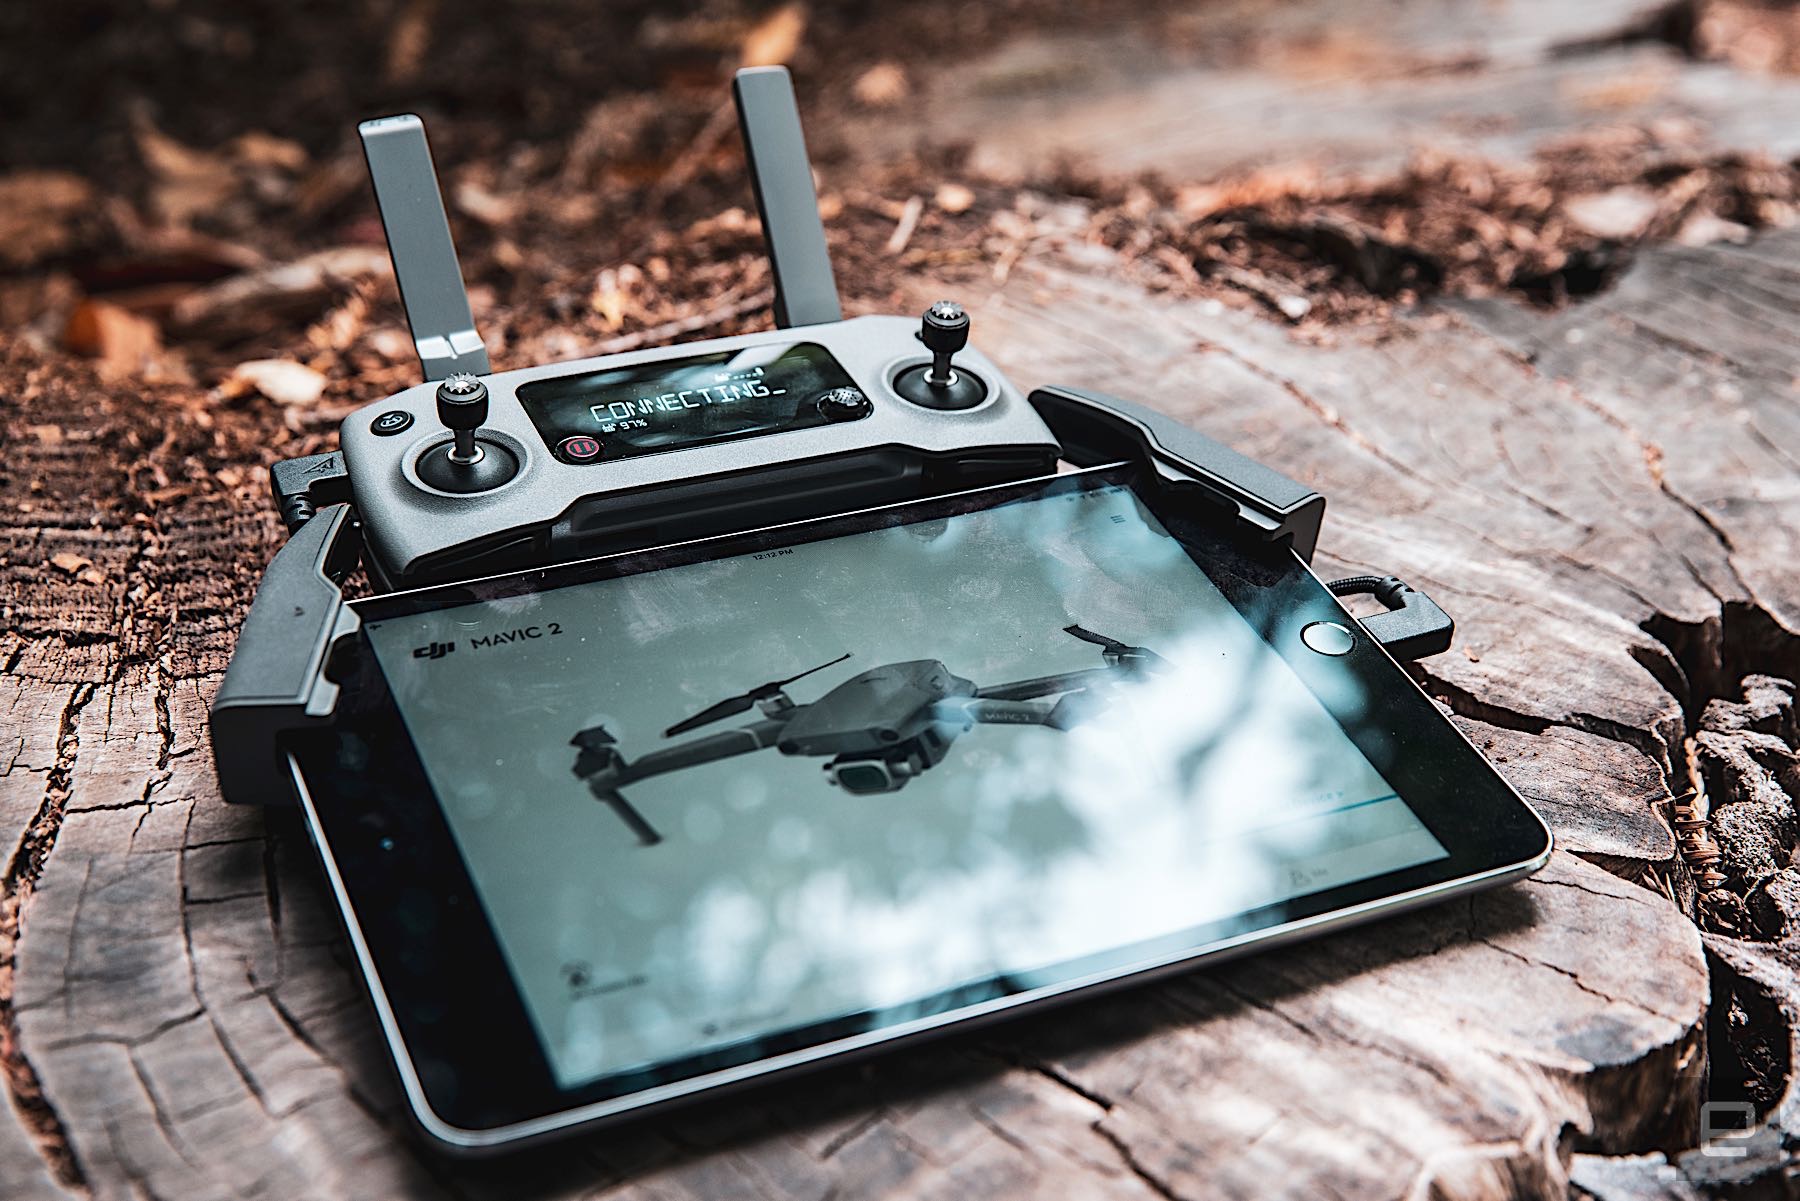 DJI Mavic 2 review: Two drones, one tough choice |